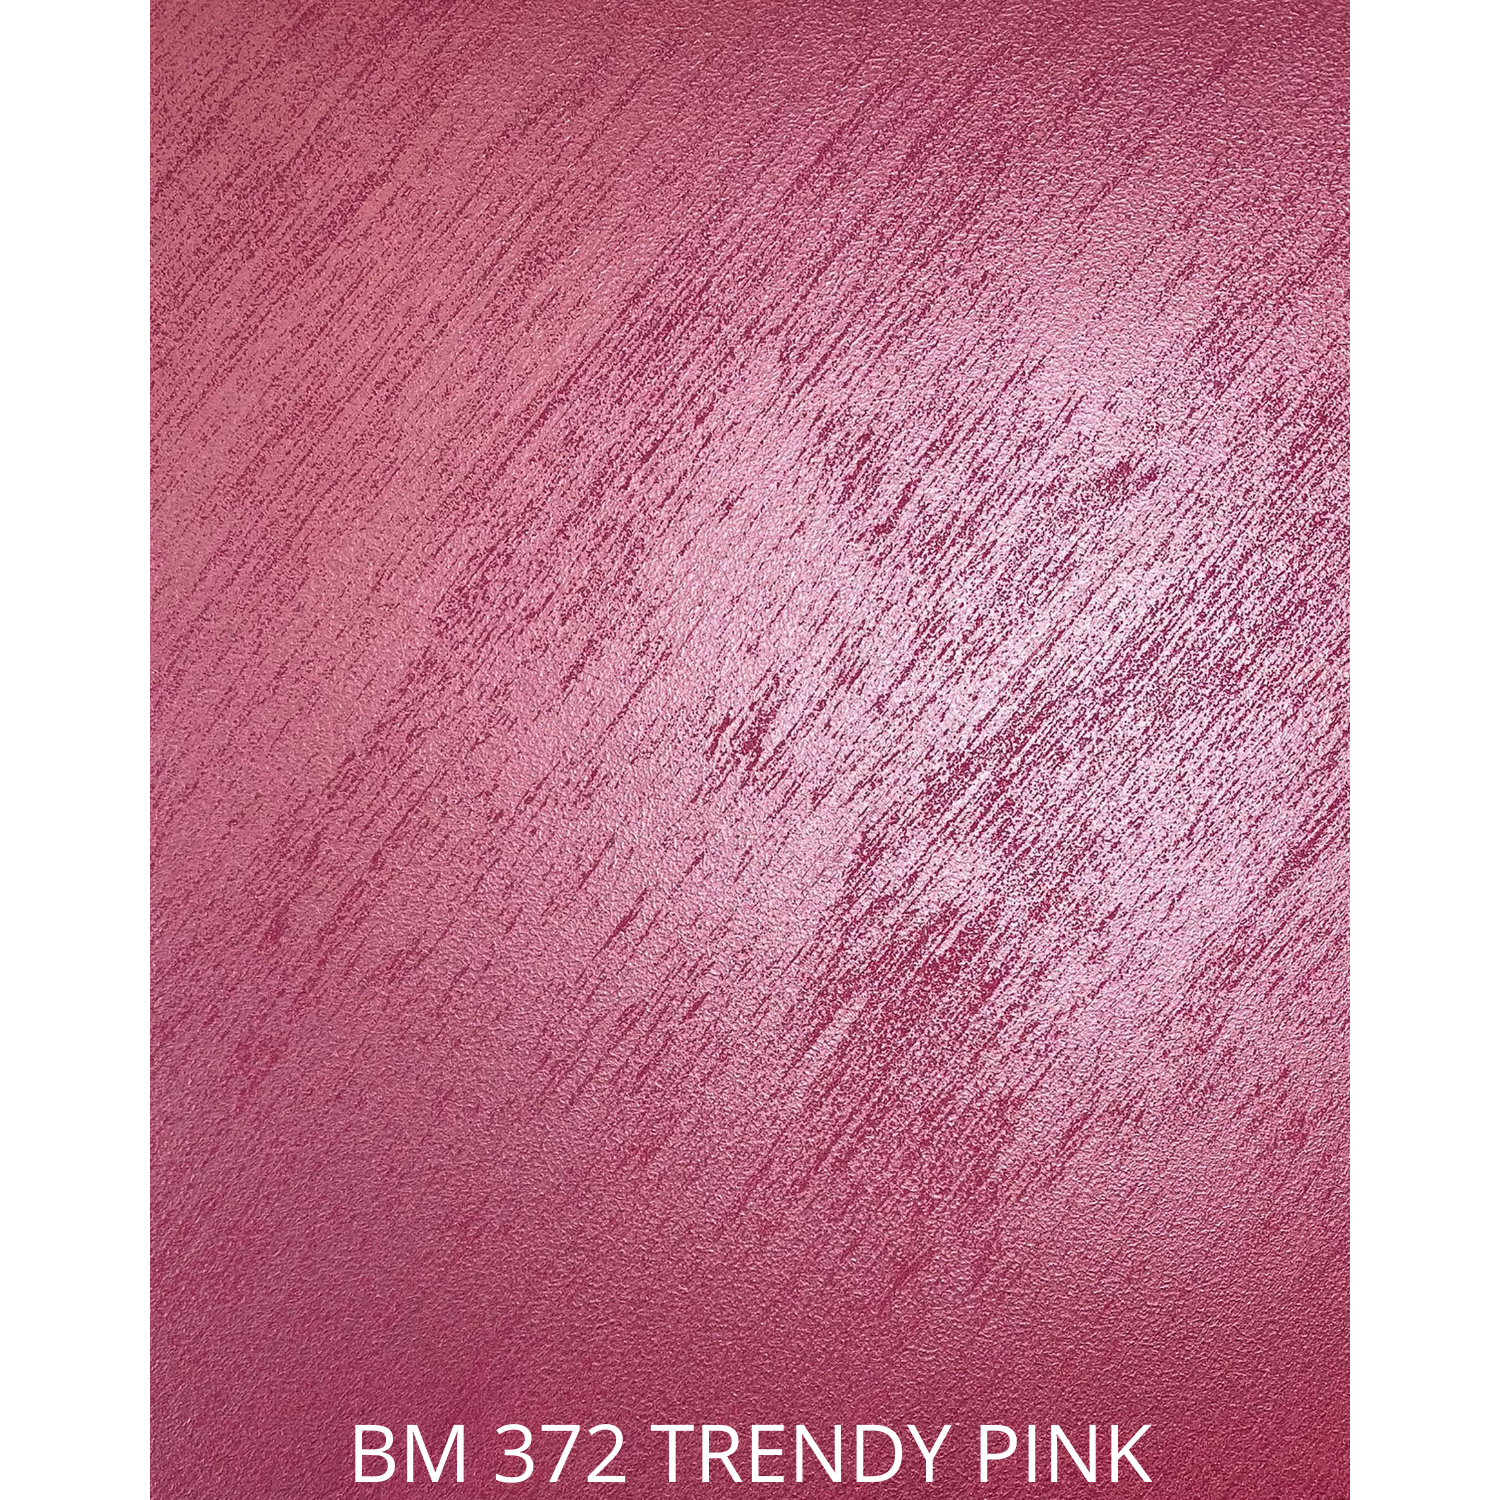 BM 372 TRENDY PINK